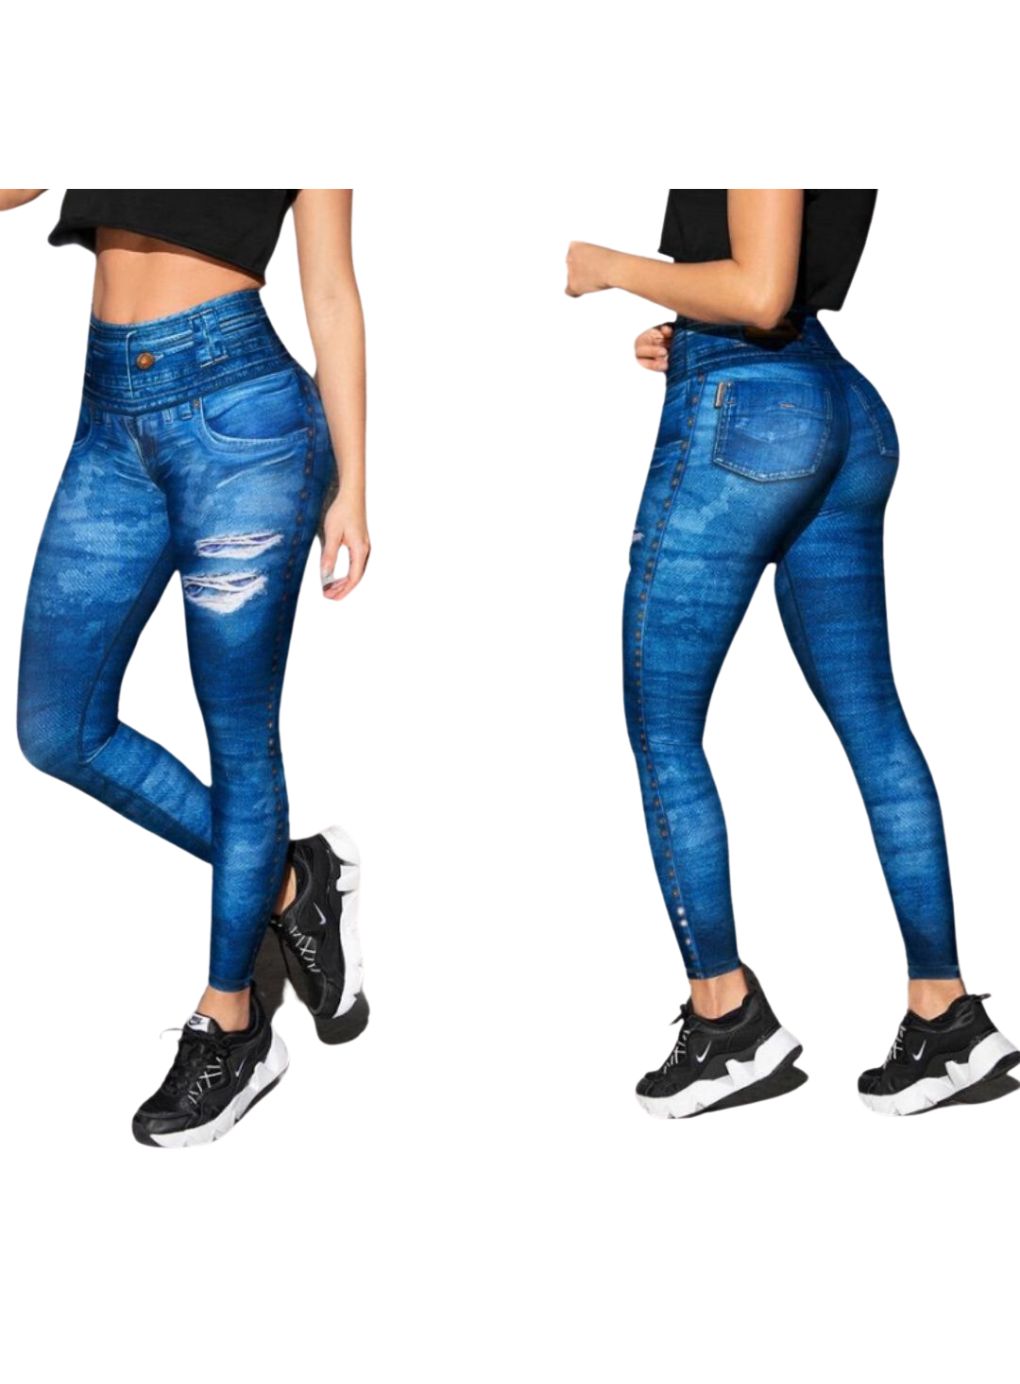 Stretchy Snowflake Skinny Denim Look Leggings For Women Soft Denim Jeans  From Cozycomfy21, $13.09 | DHgate.Com